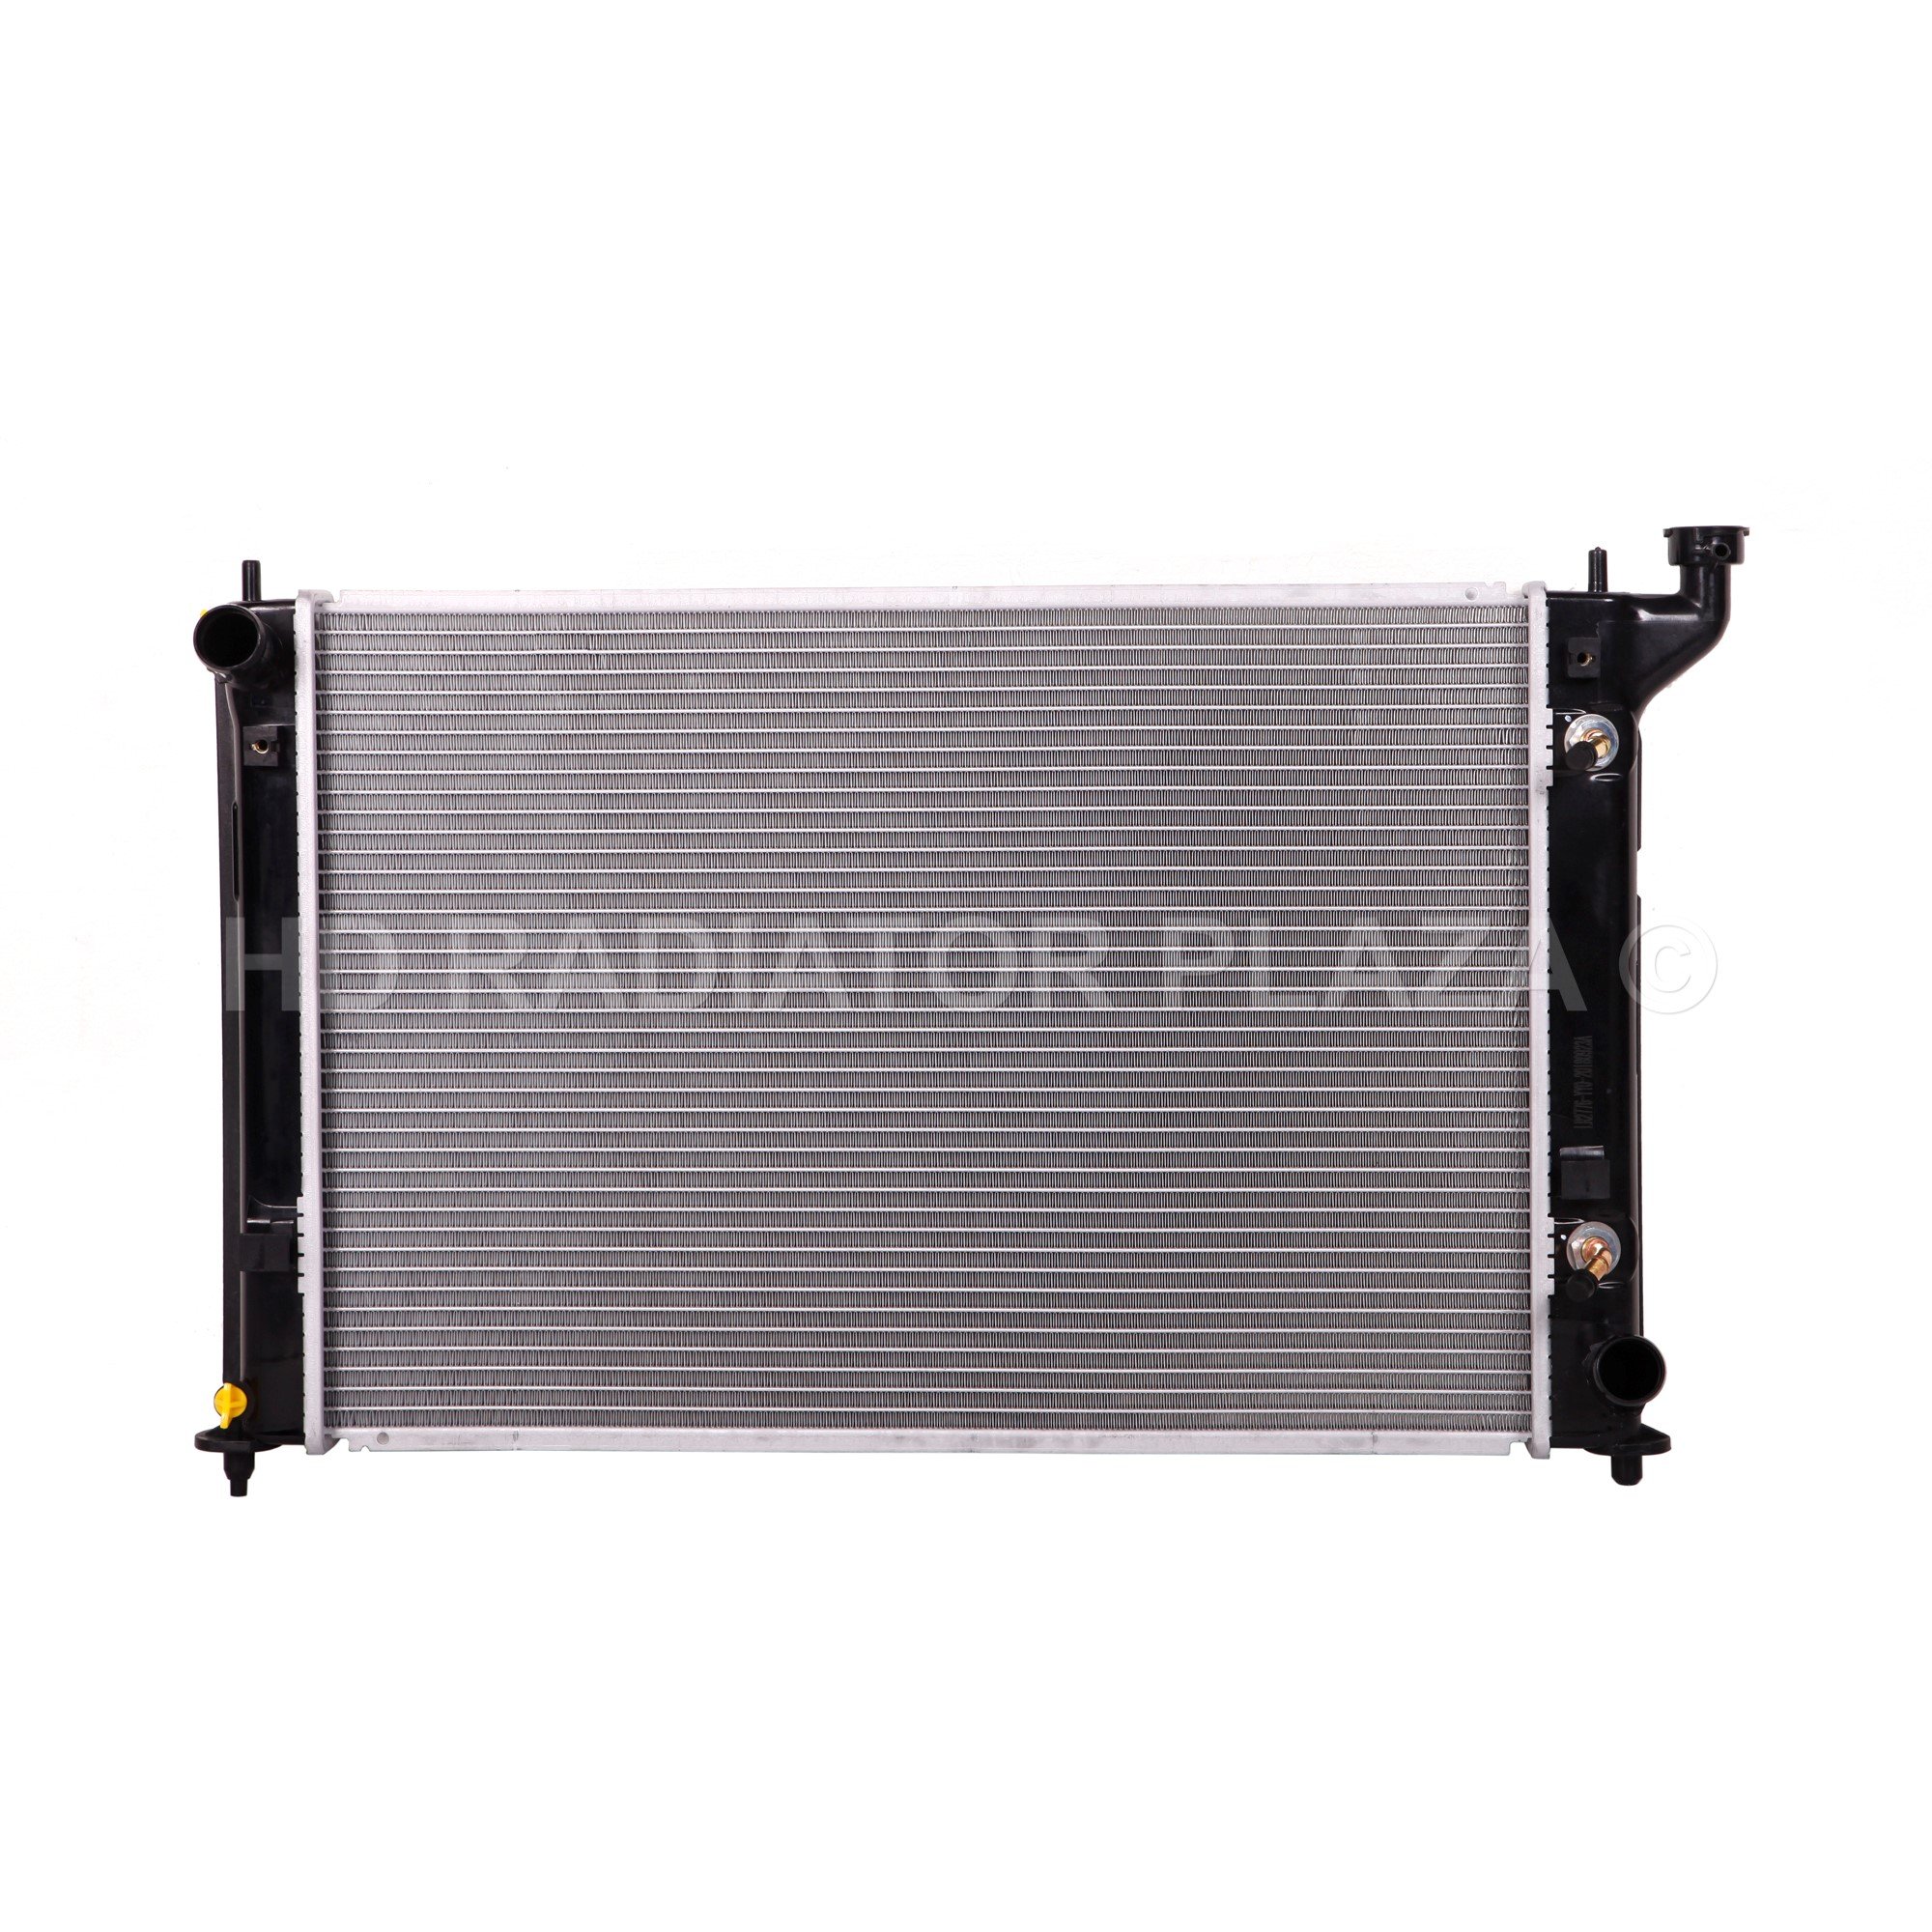 Radiator for 2005-2010 Scion tC 2.4L I4